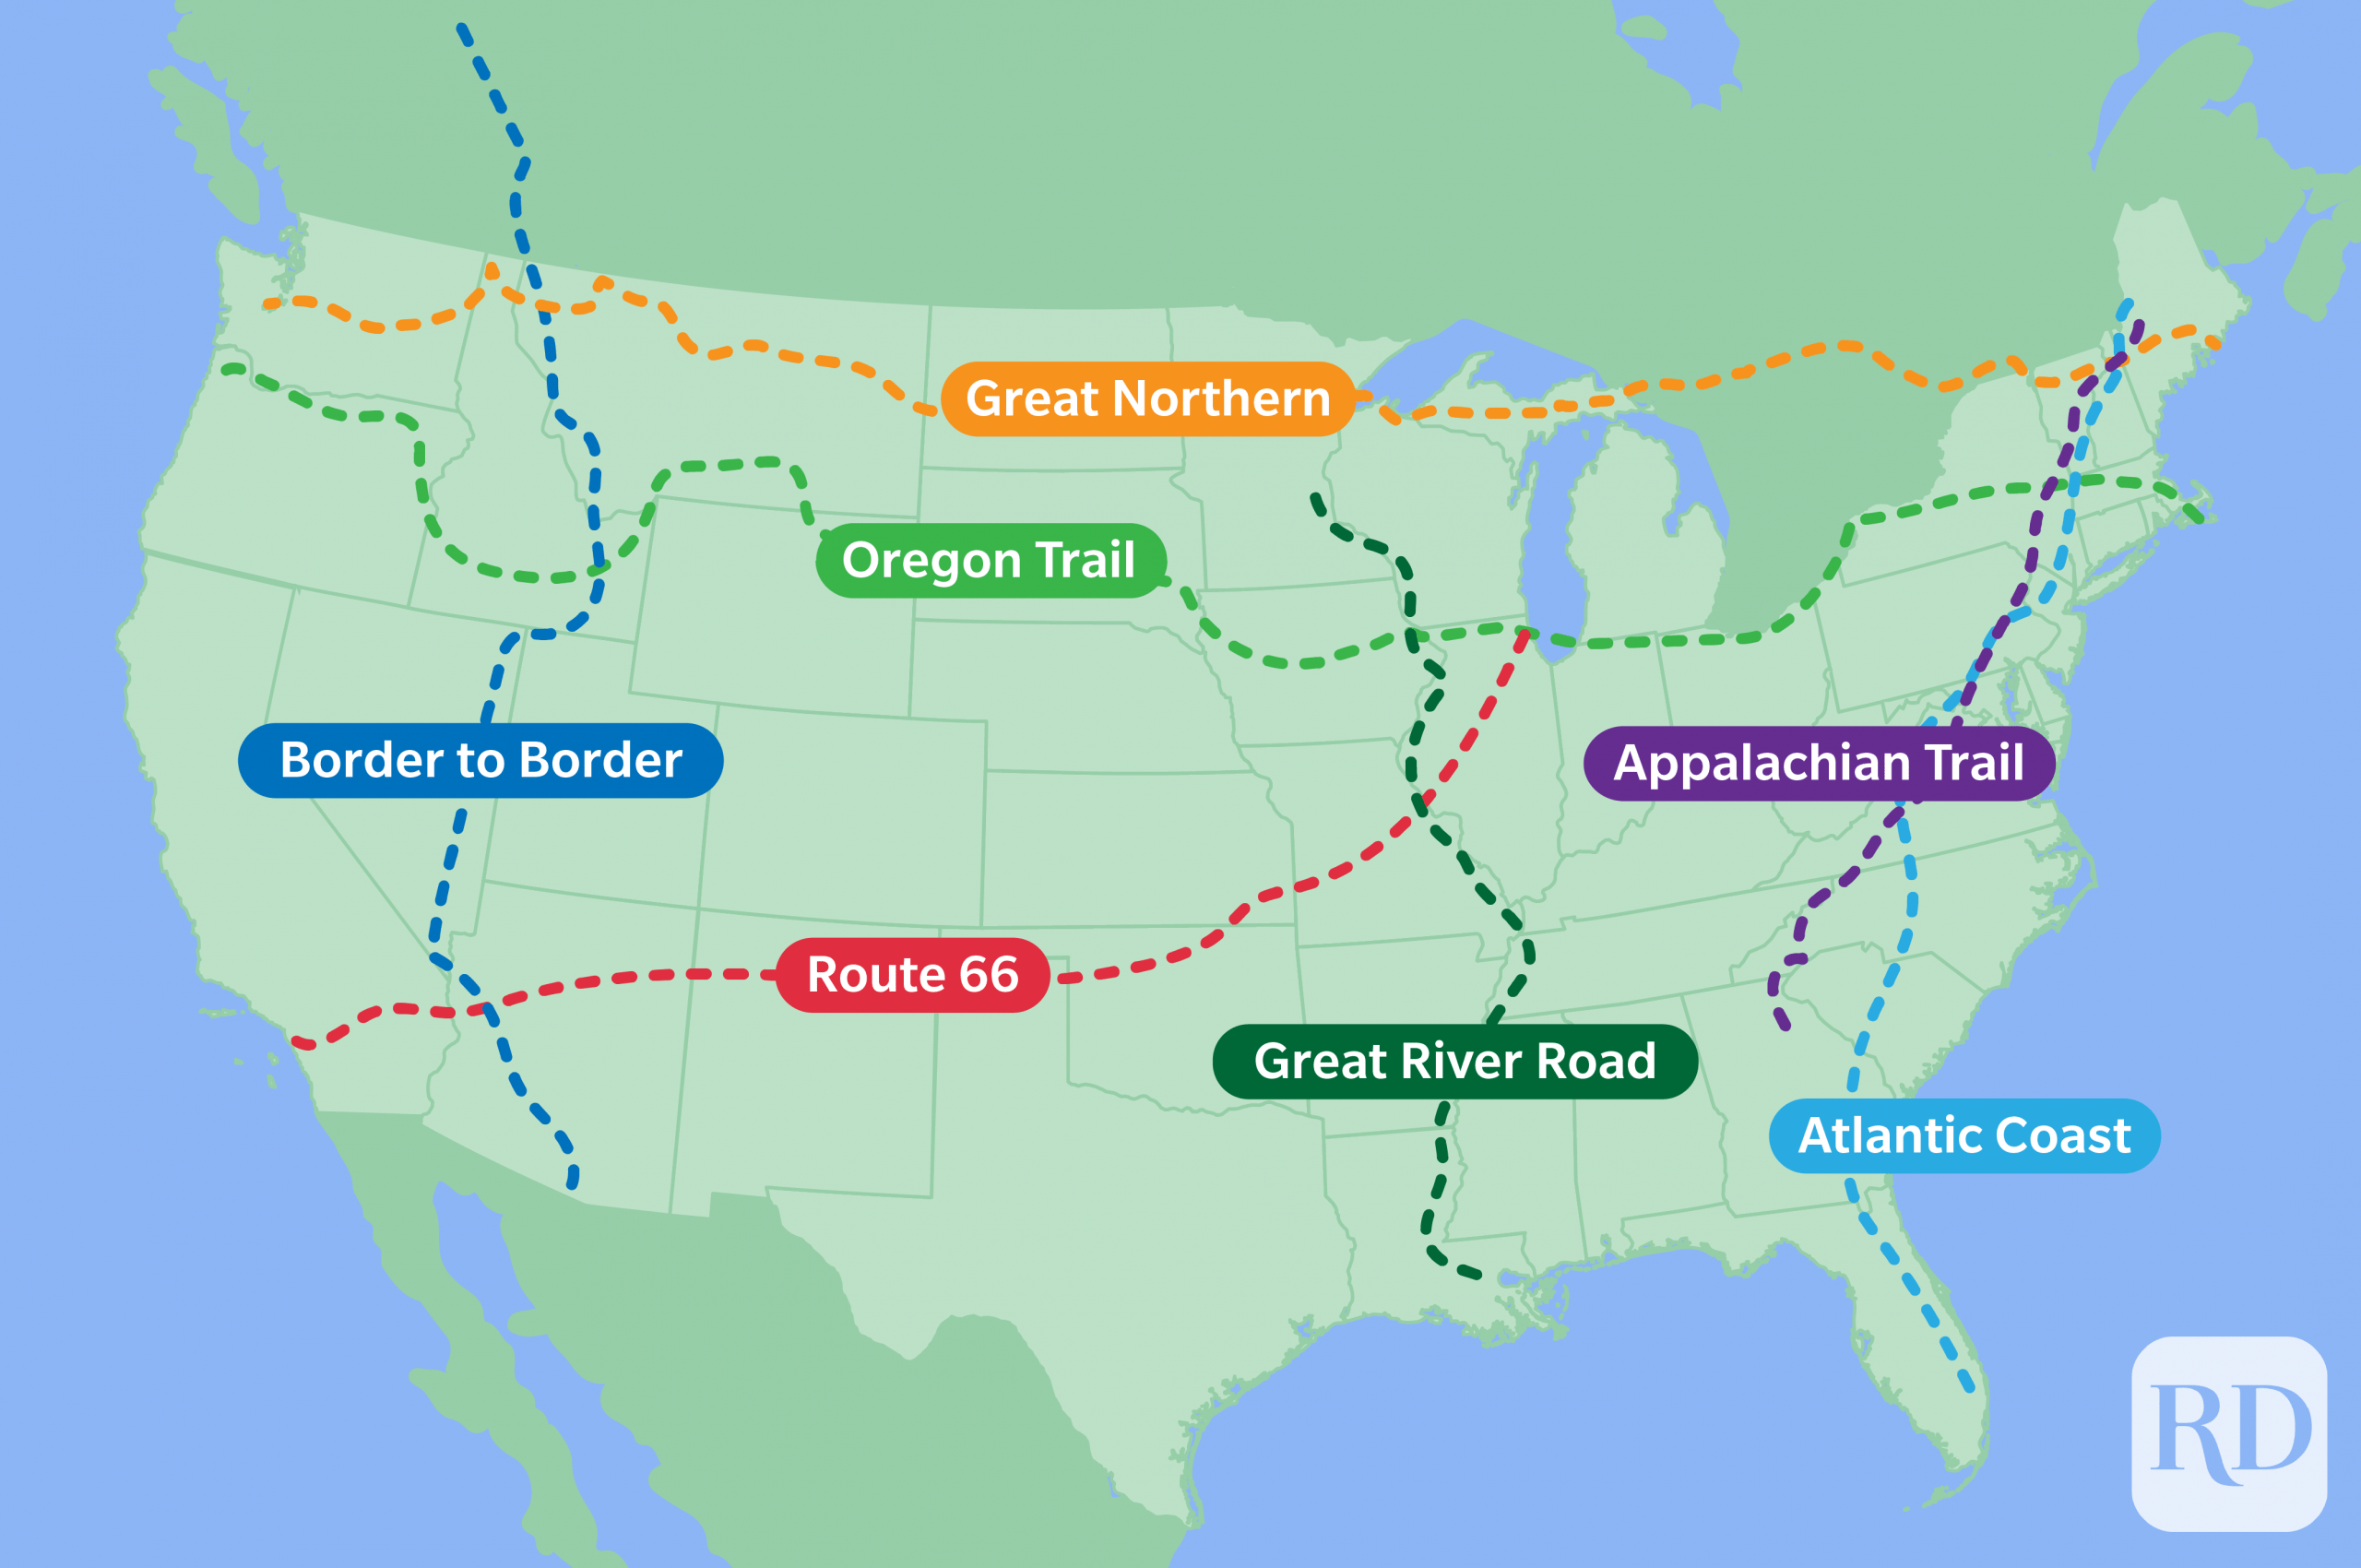 american road trip genre